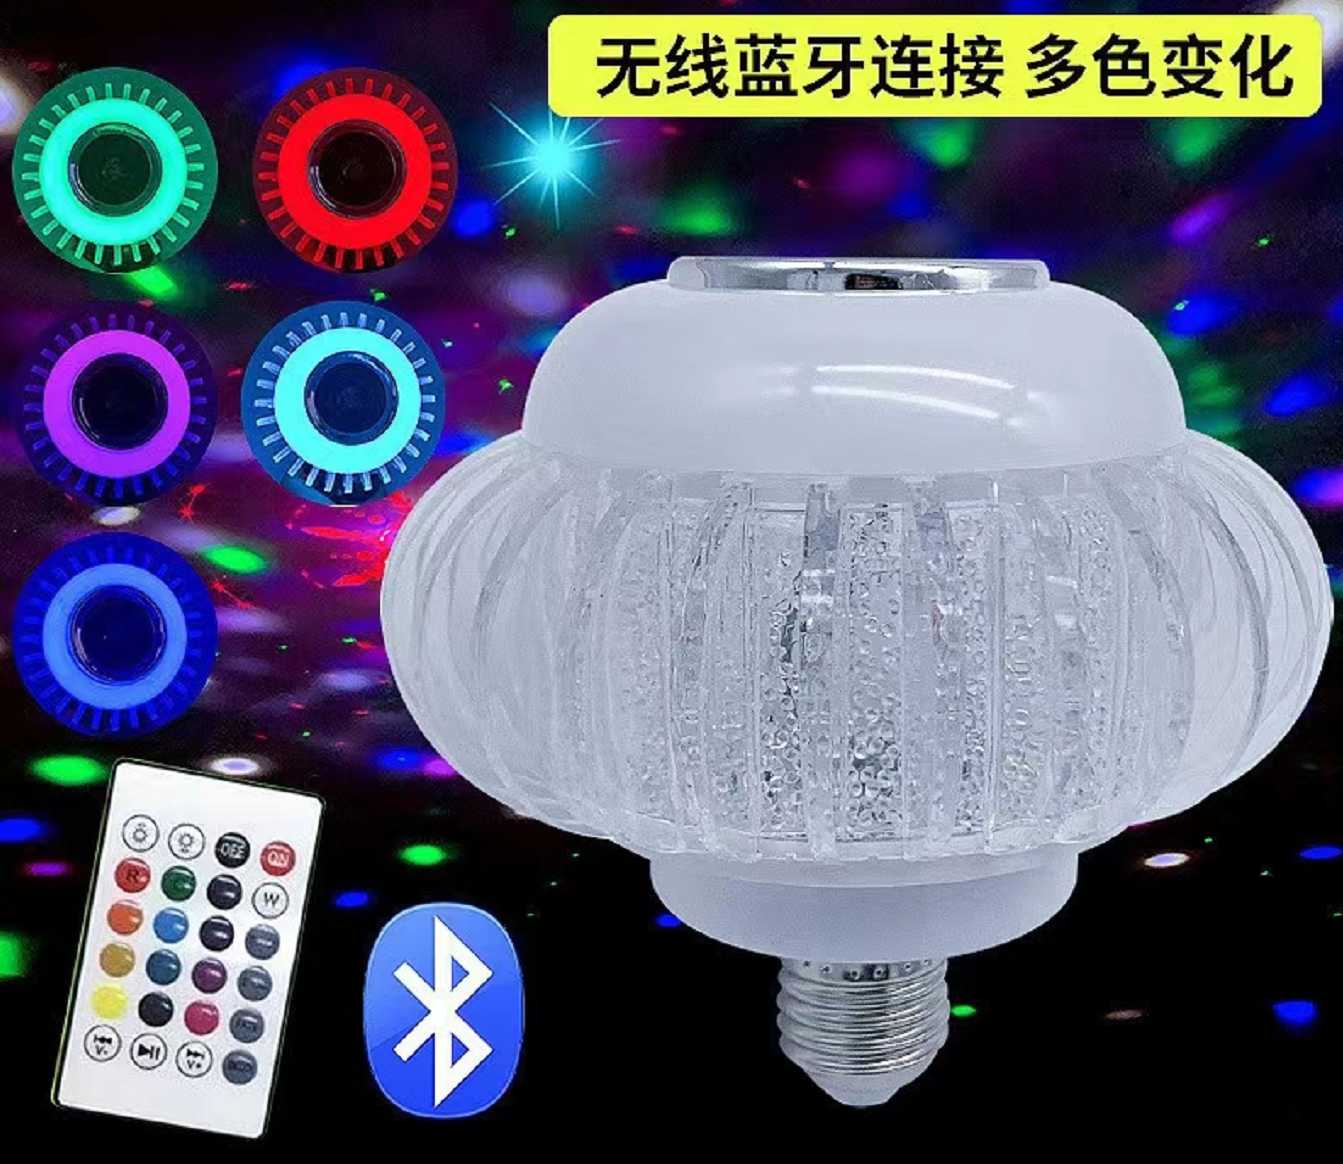 Photorhythmic RGB lamp with Bluetooth speaker - 903005